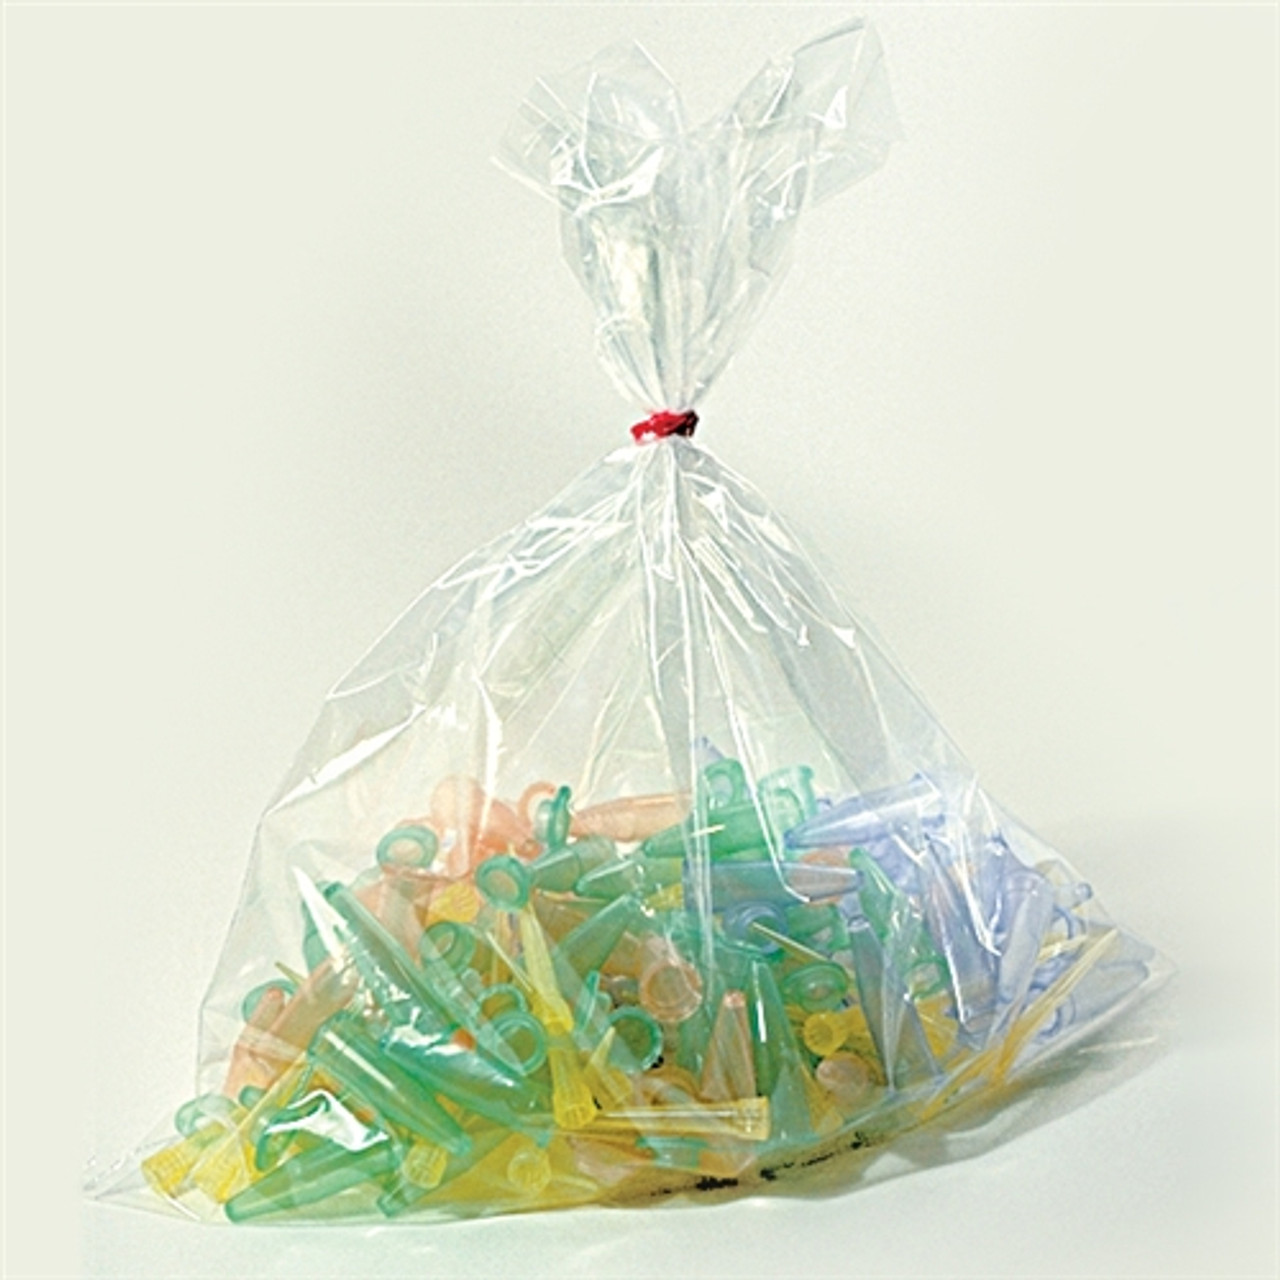 Zip Bags Plastic Clear 18x24 large heavy each